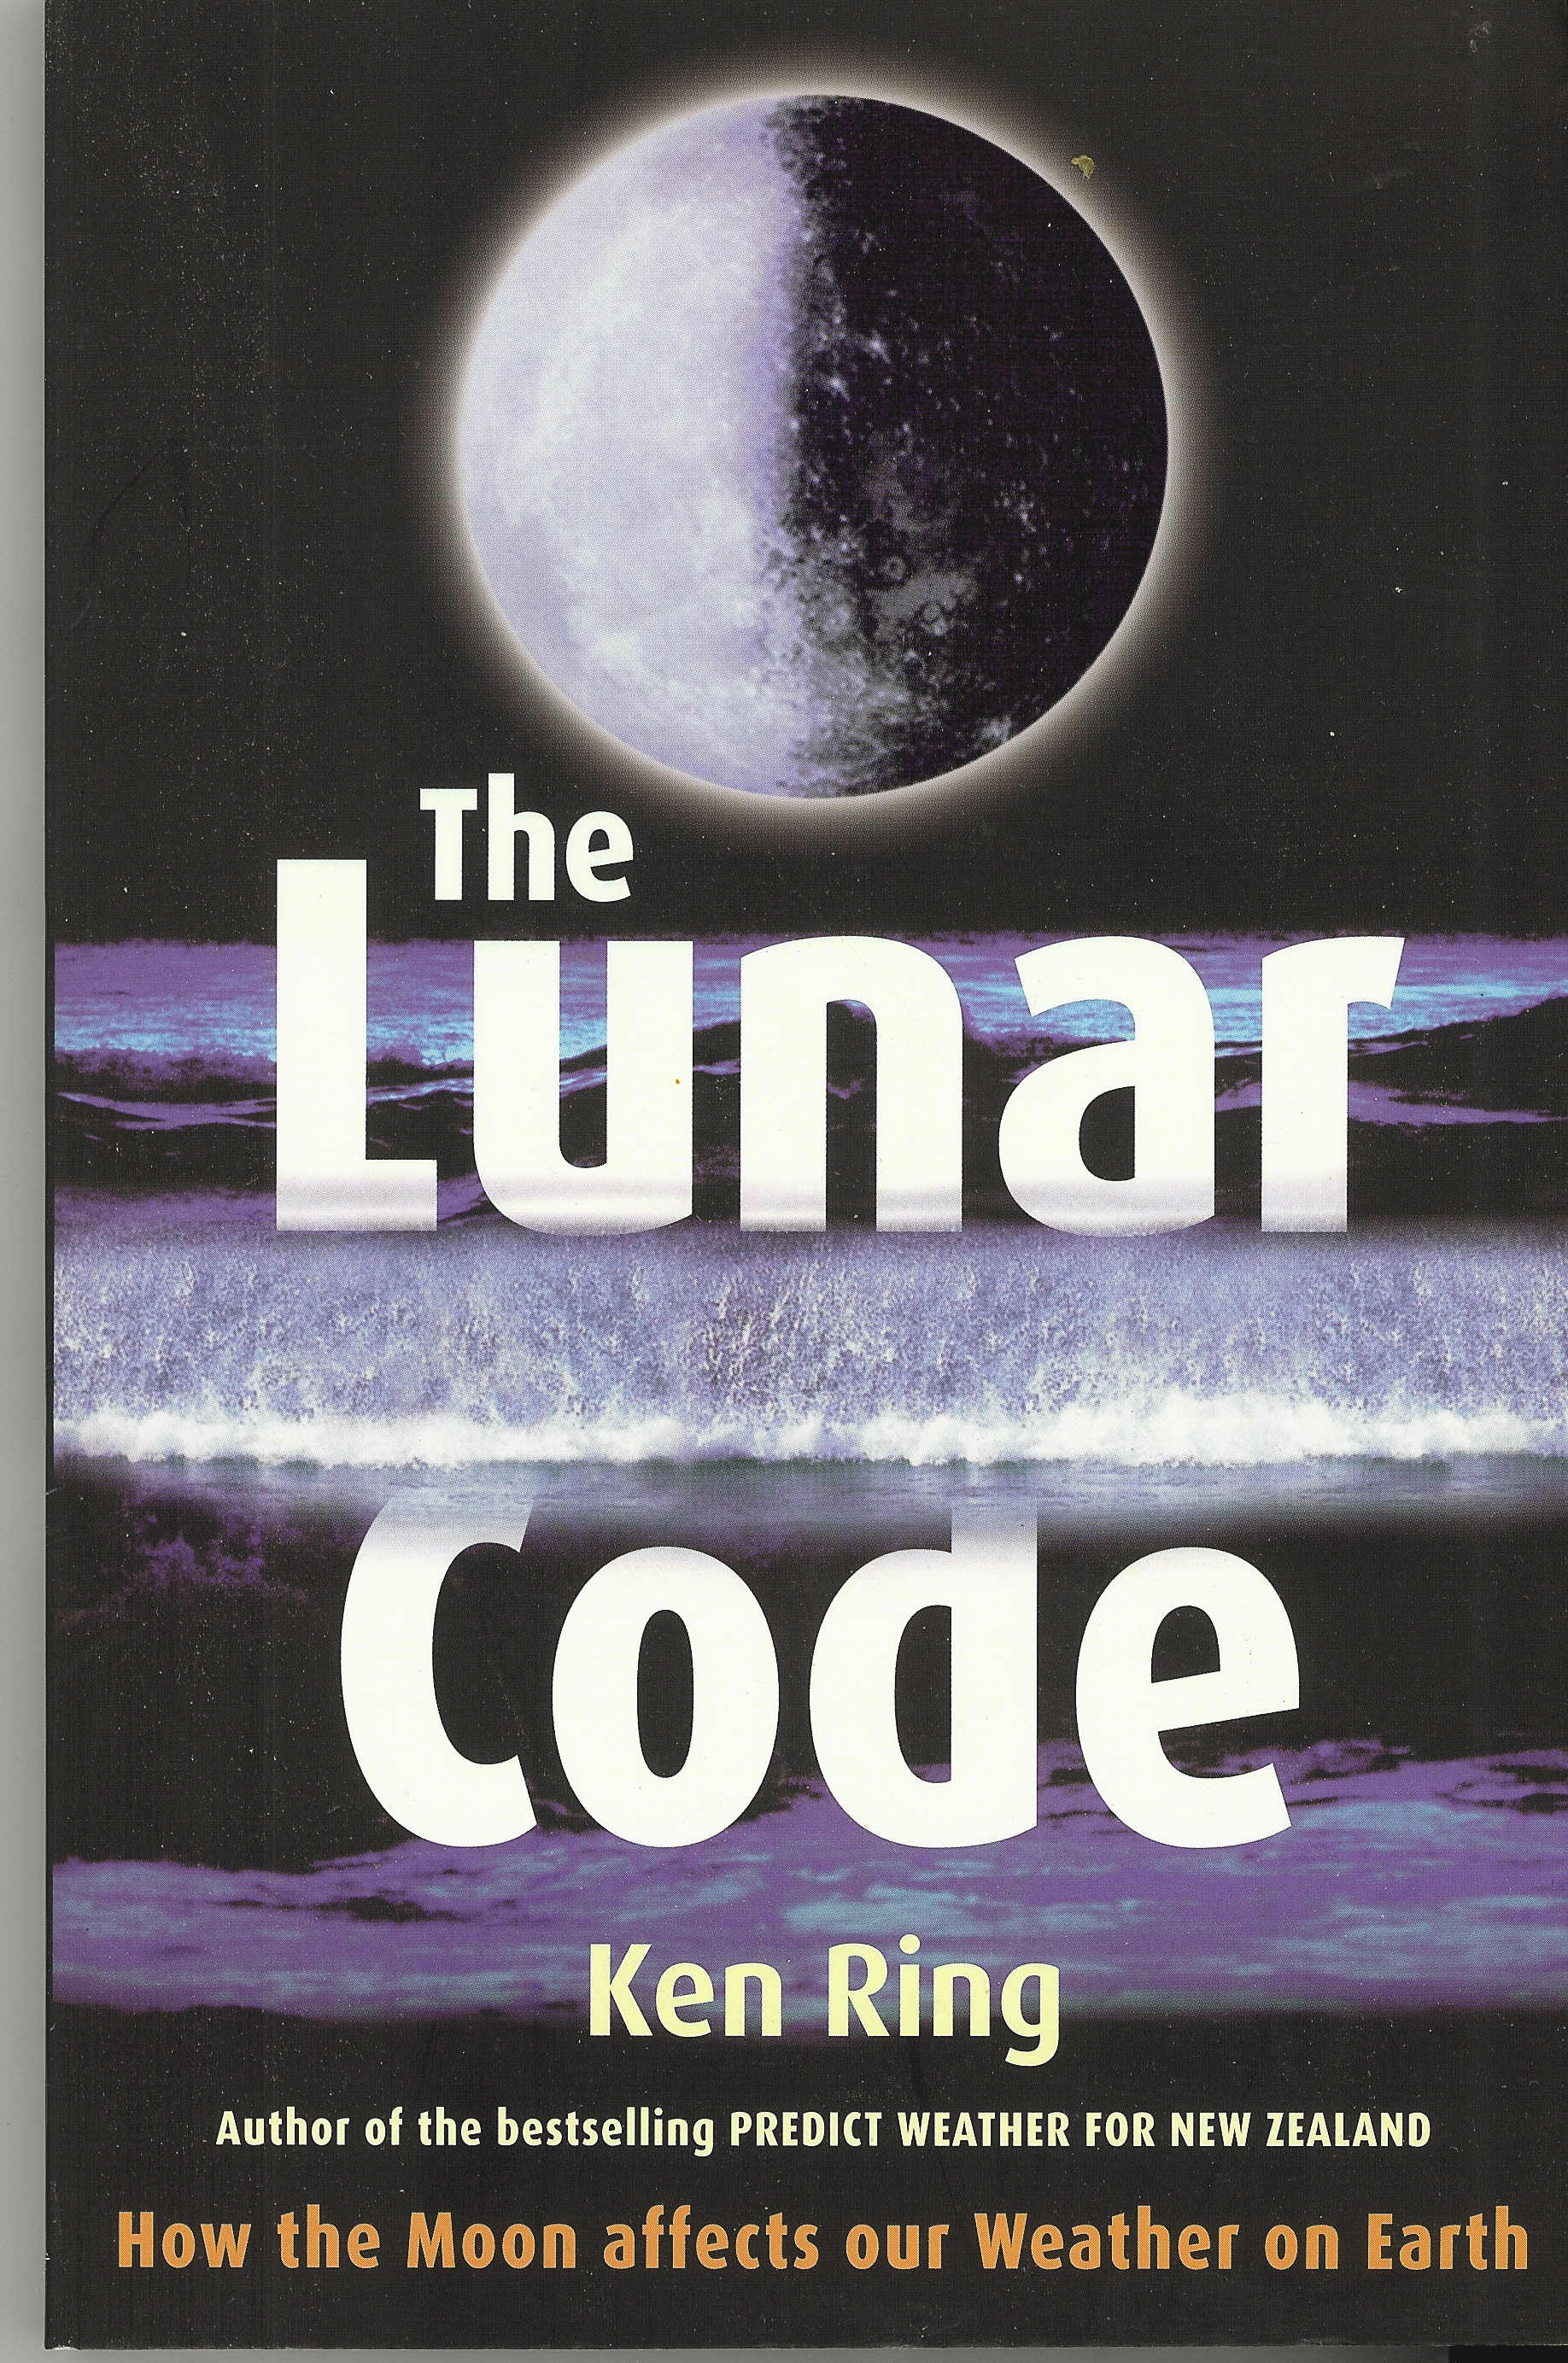 The Lunar Code